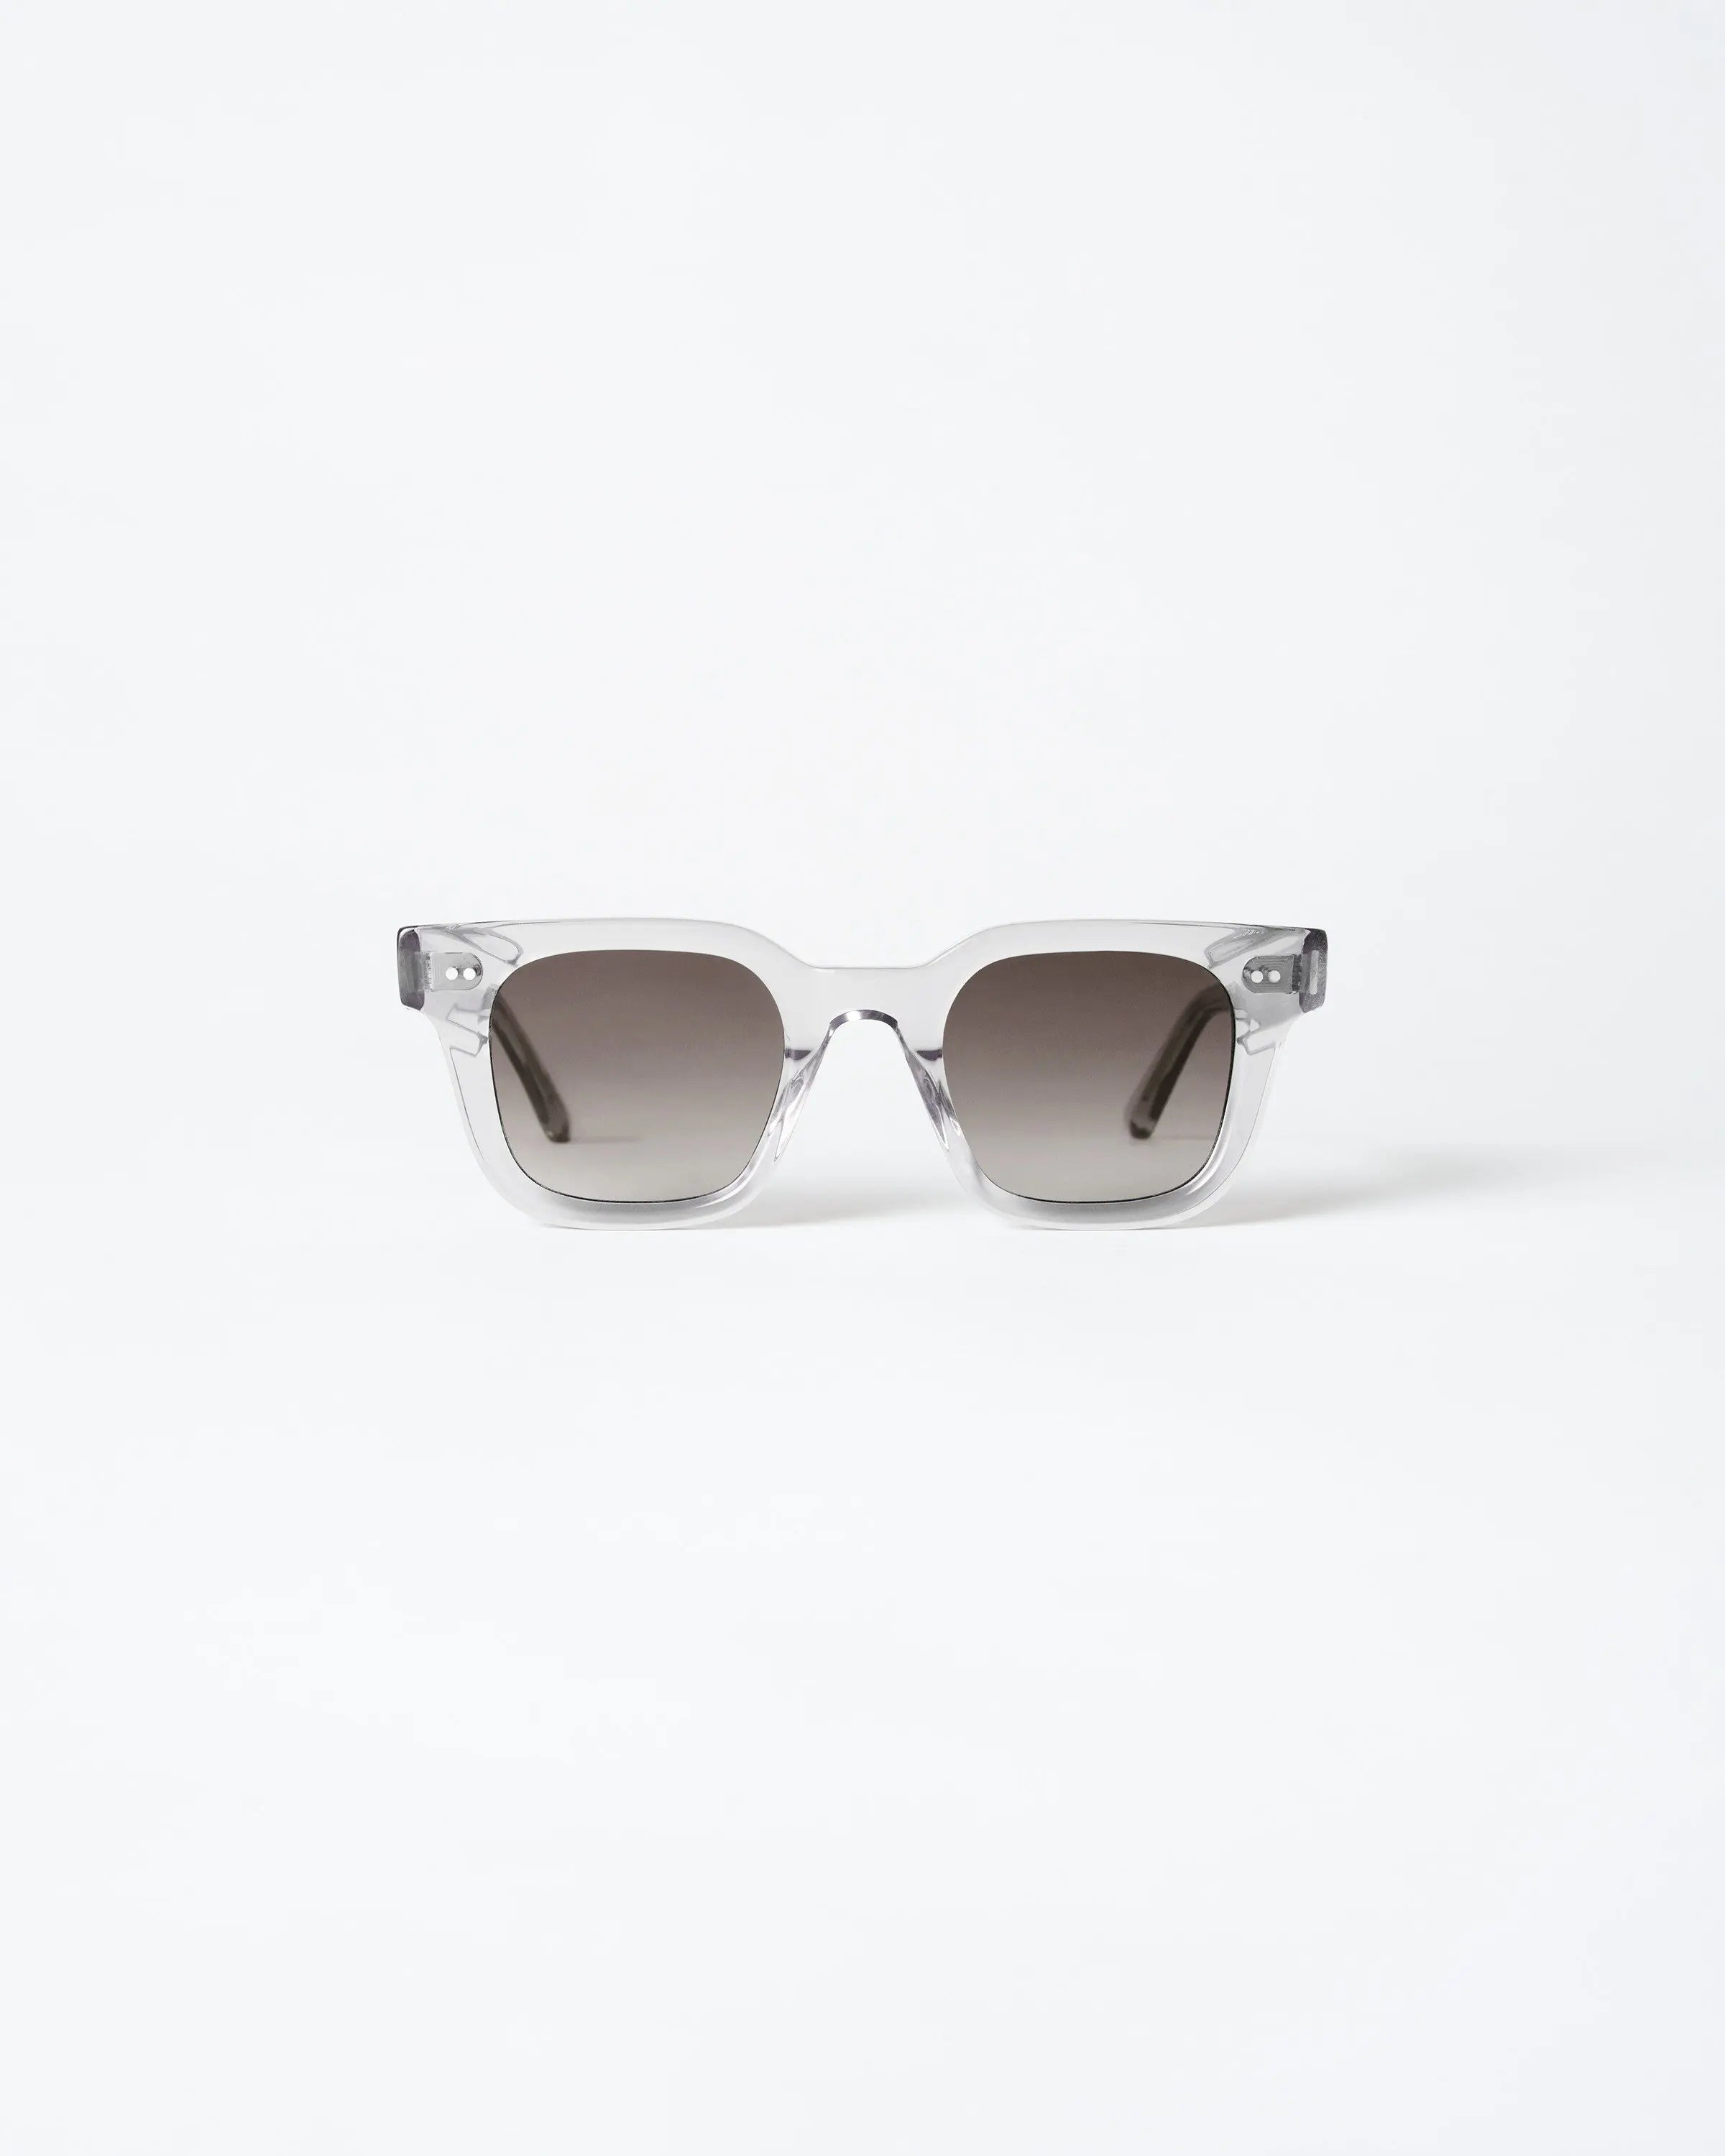 CHIMI 04 Sunglasses